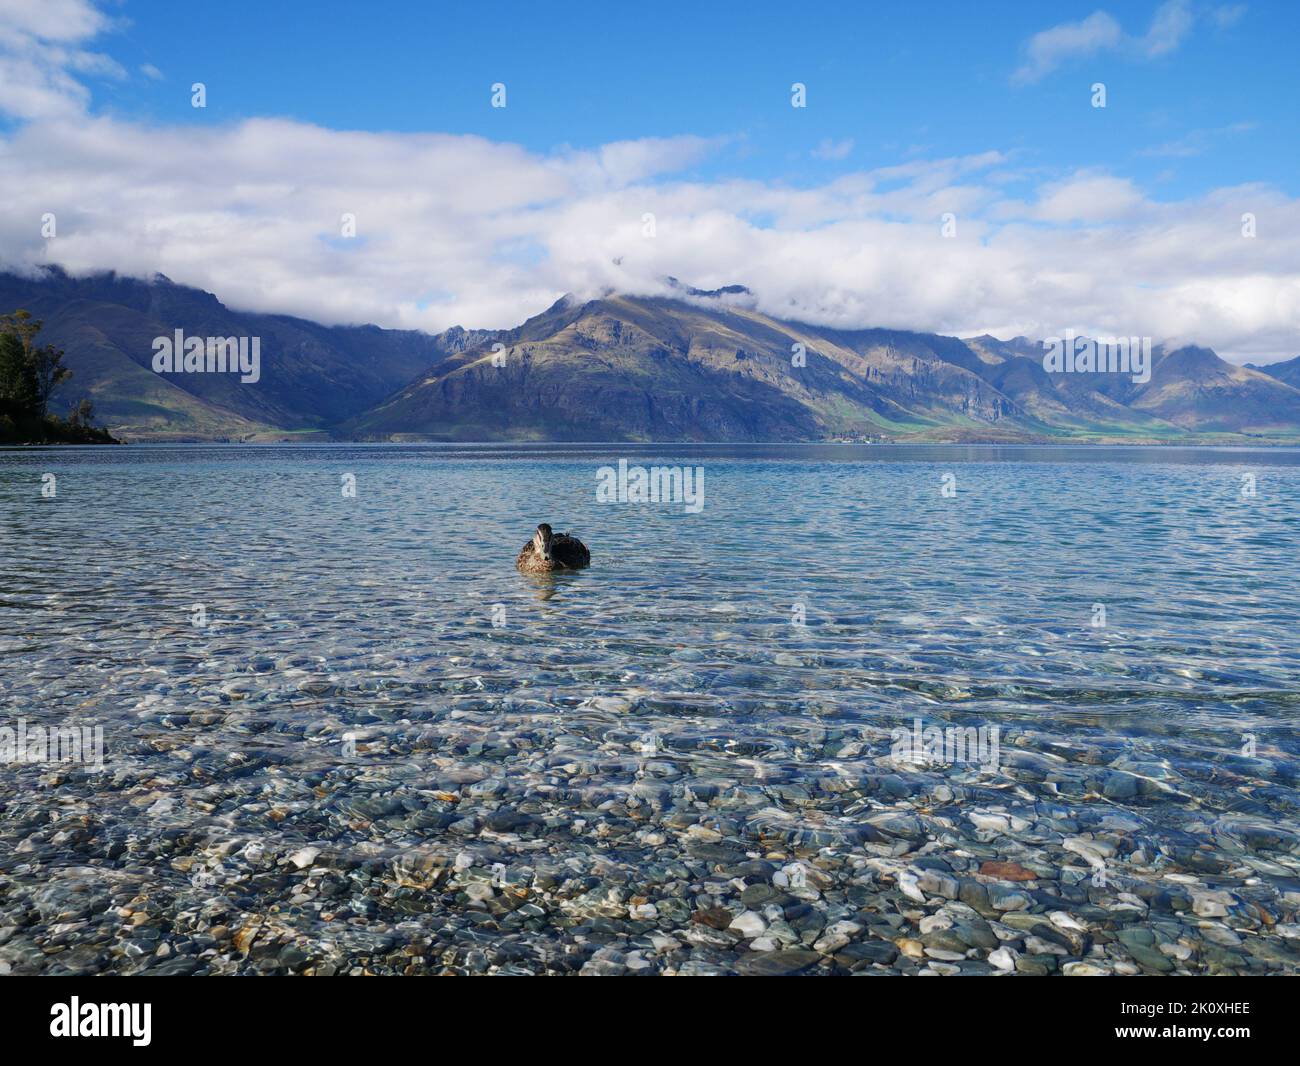 Ente schwimmt auf einem Bergsee - Lago Wakatipu Neuseeland Nuova Zelanda Foto Stock